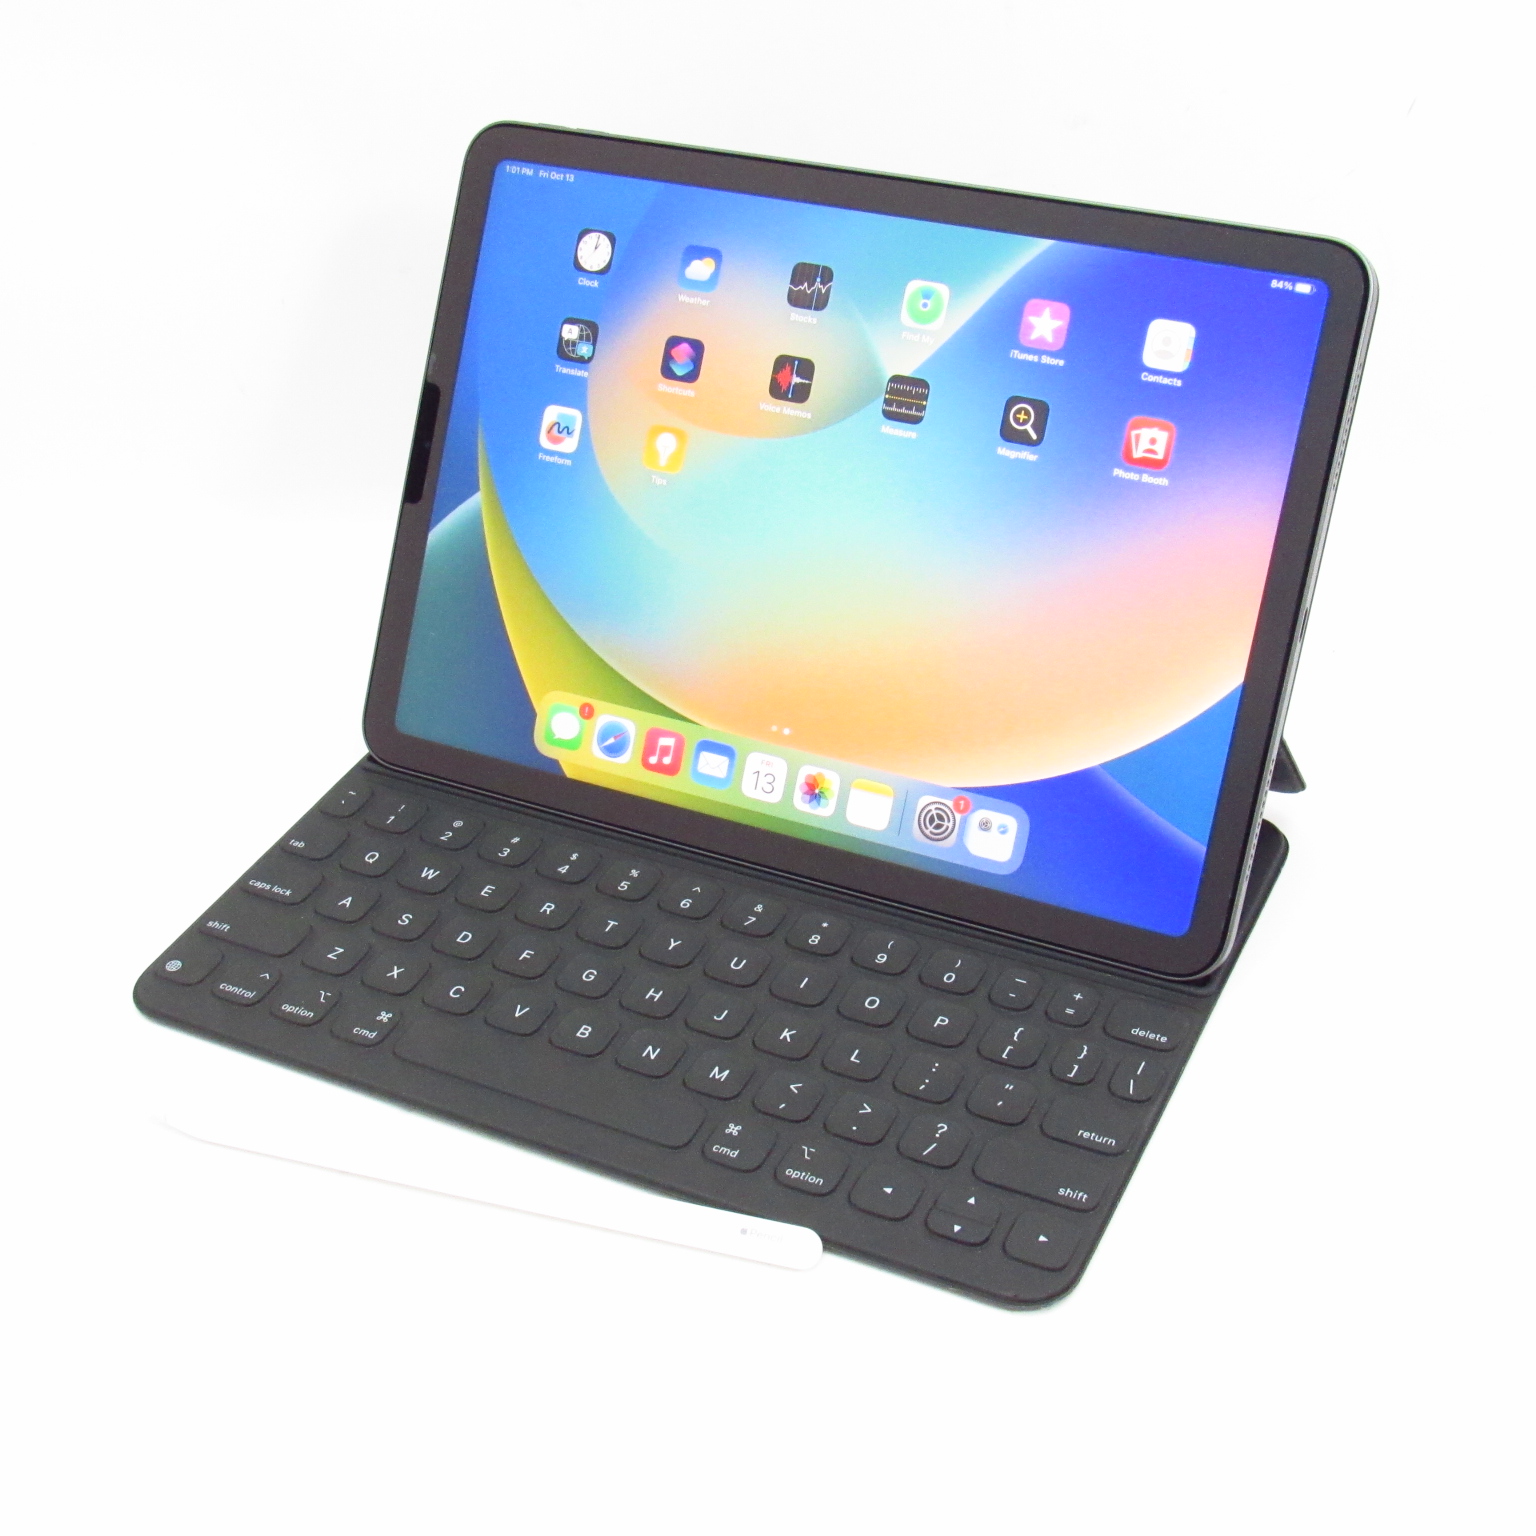 Apple iPad Air 4th Gen (A14 Bionic) FYFM2LL/A 64GB 10.9'' Wi